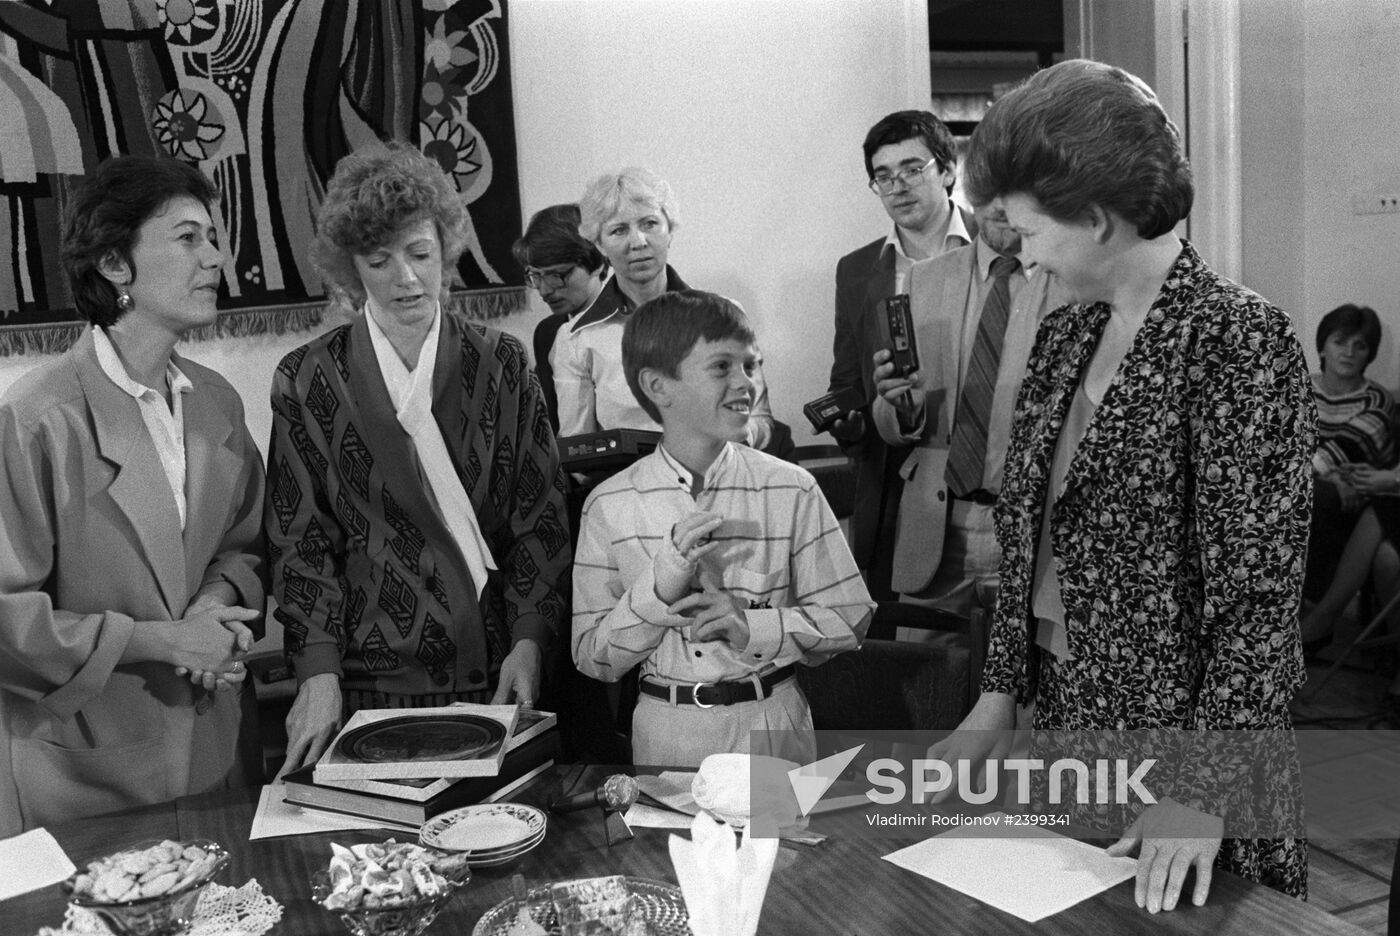 Australian school student Burke and Valentina Tereshkova